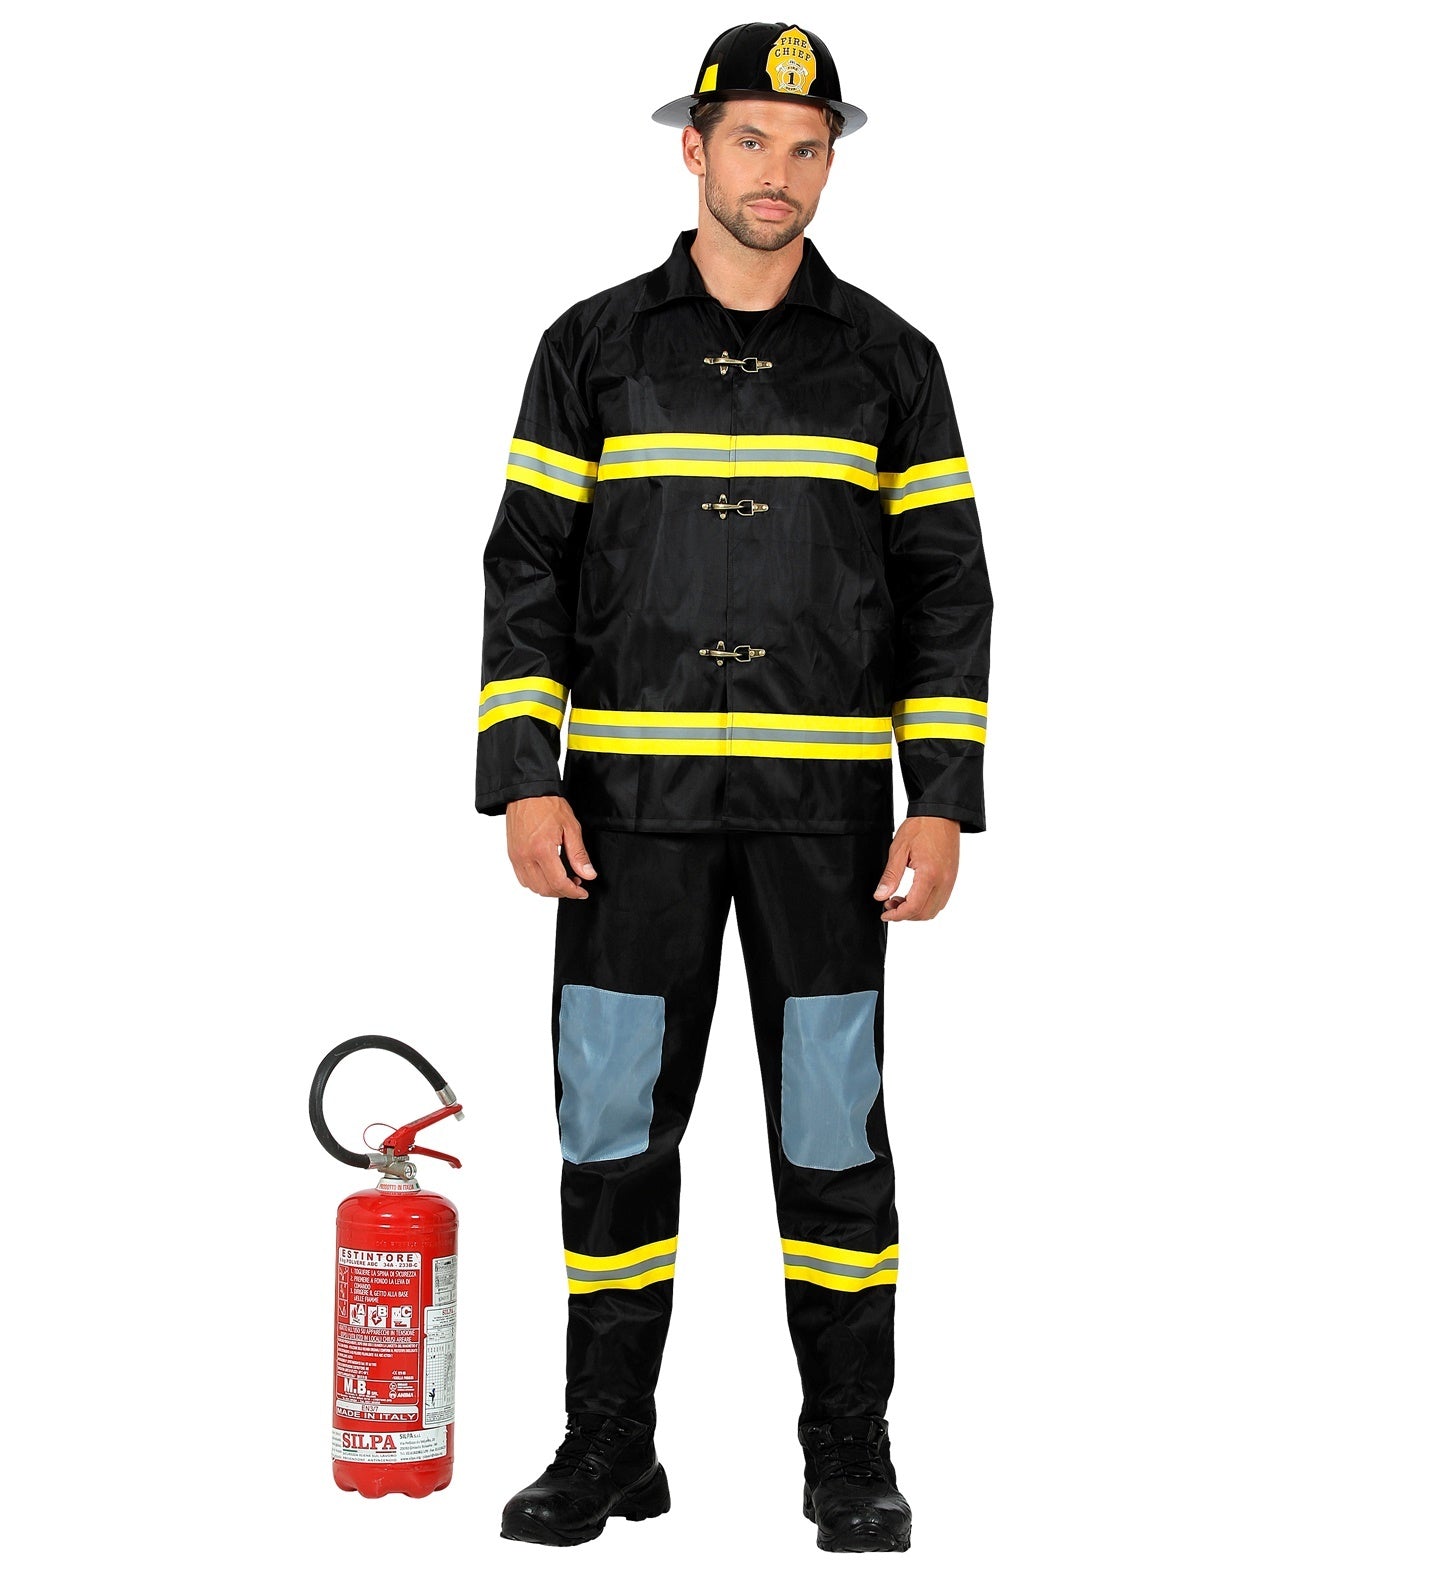 Widmann - Brandweer Kostuum - Vuurbestrijdende Levensredder Brandweerman Kostuum - geel,zwart - Medium - Carnavalskleding - Verkleedkleding